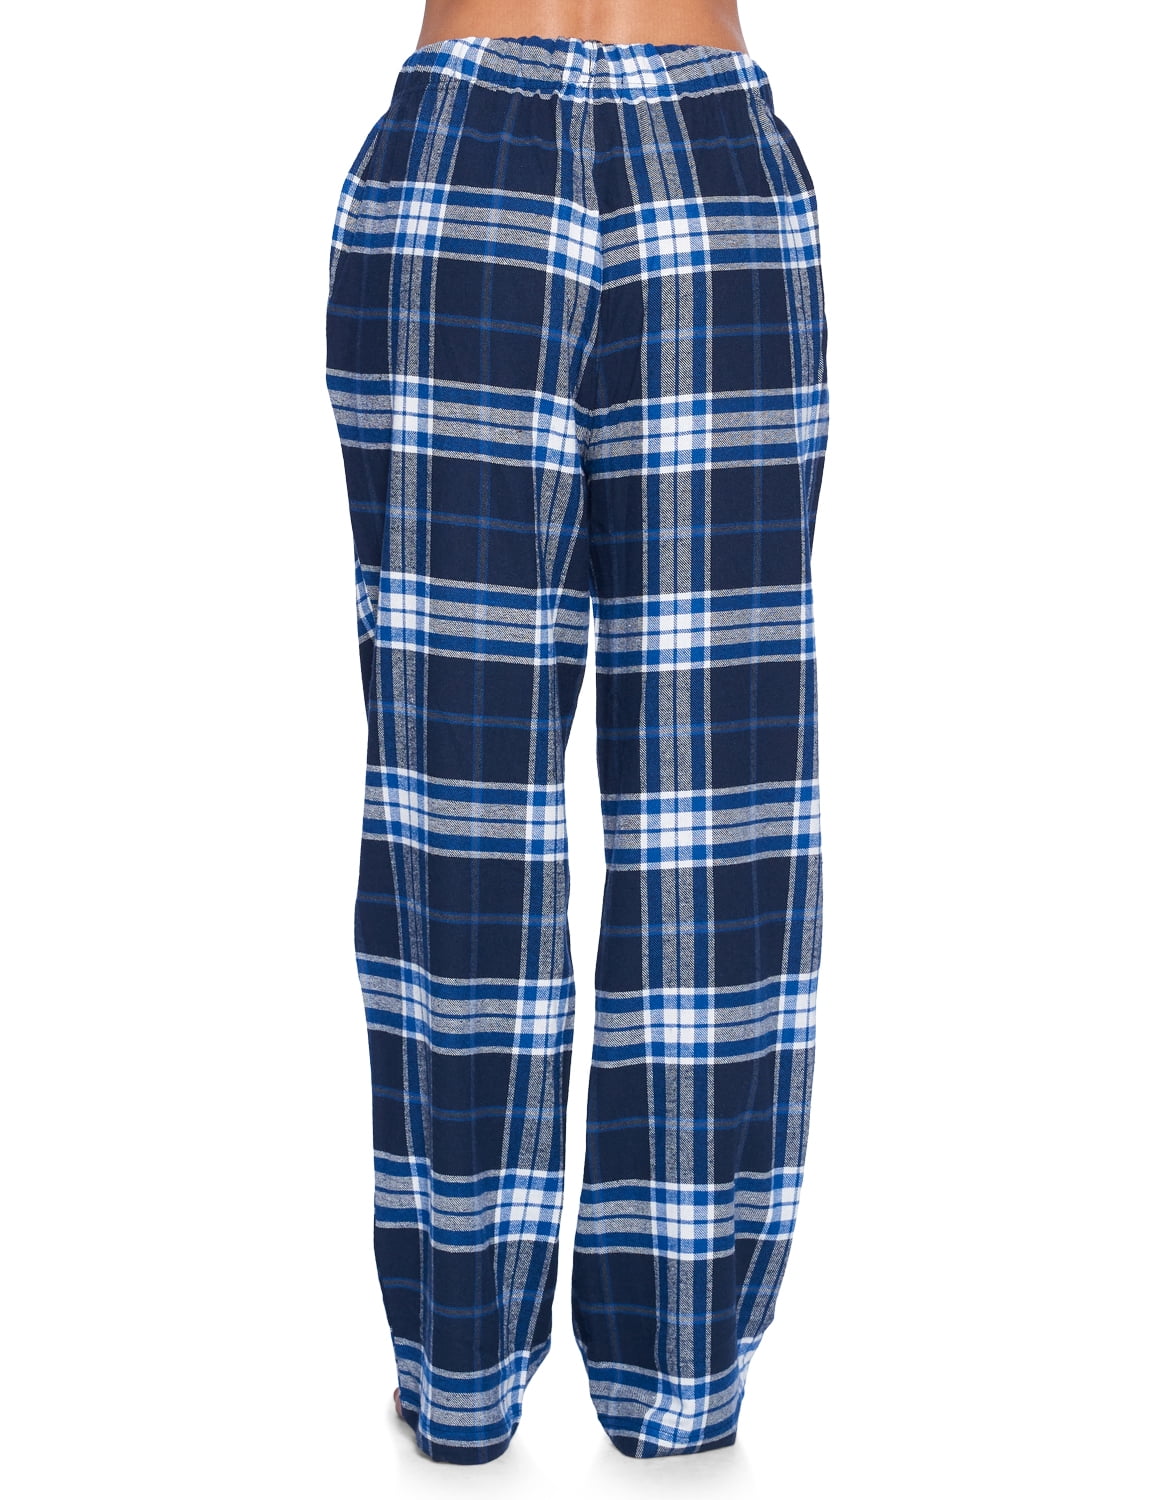 Ashford & Brooks Women's Super Soft Flannel Plaid Pajama Sleep Pants 